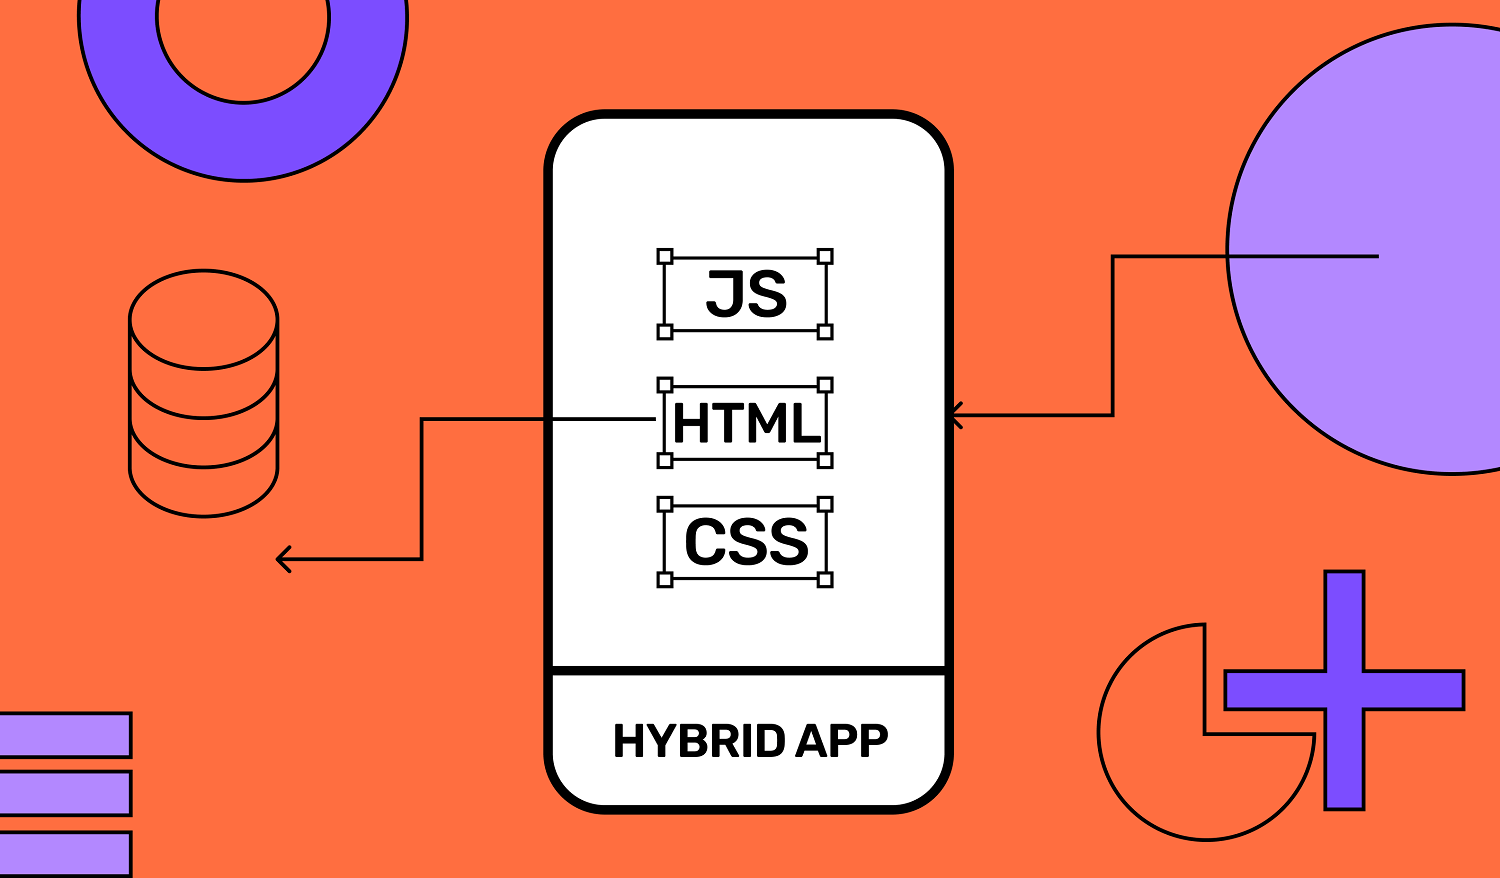 Hybrid app technology stacks